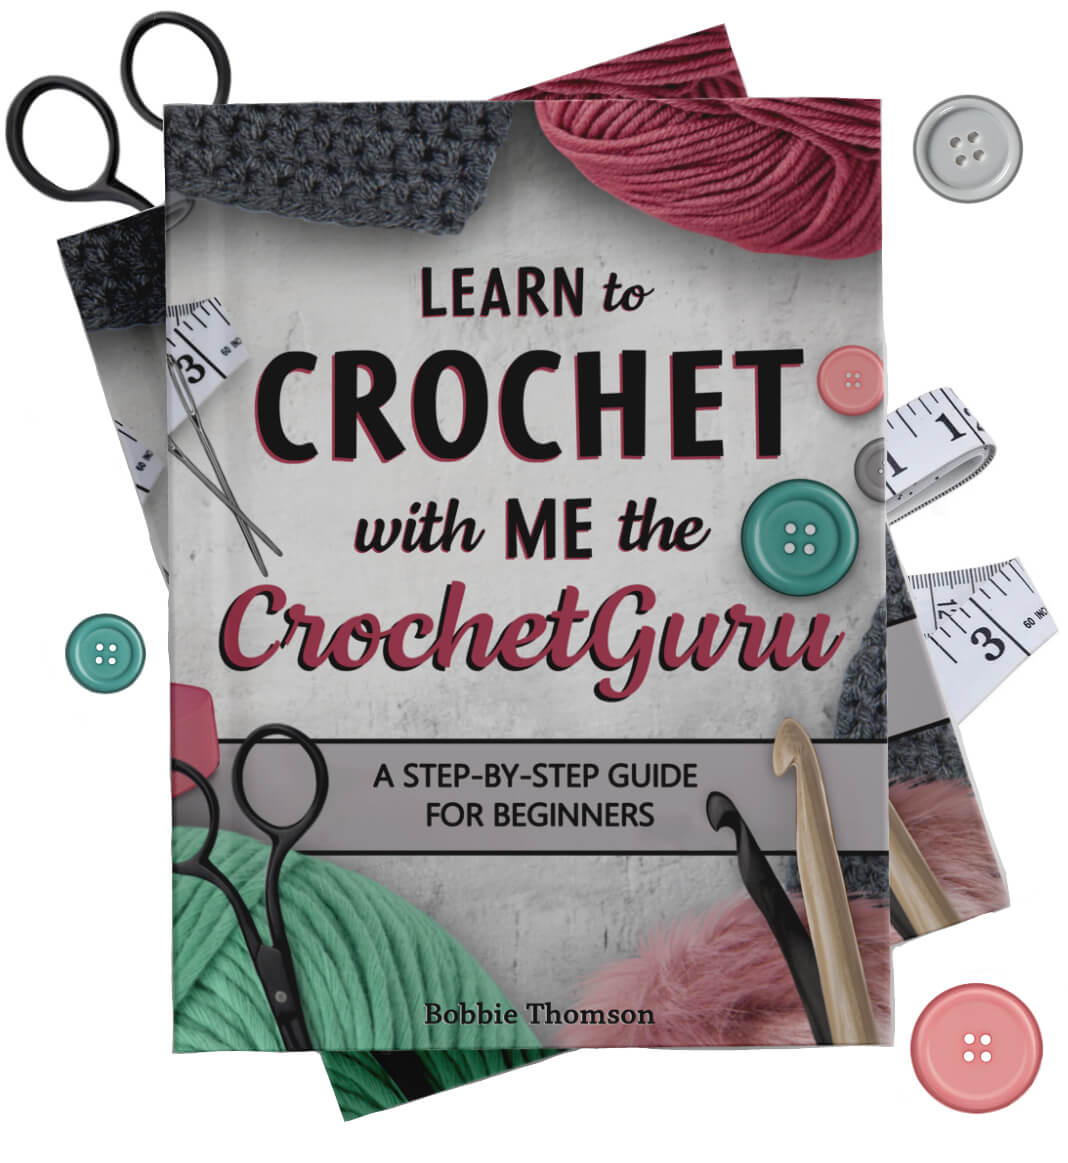 Learn to Crochet With Me the CrochetGuru